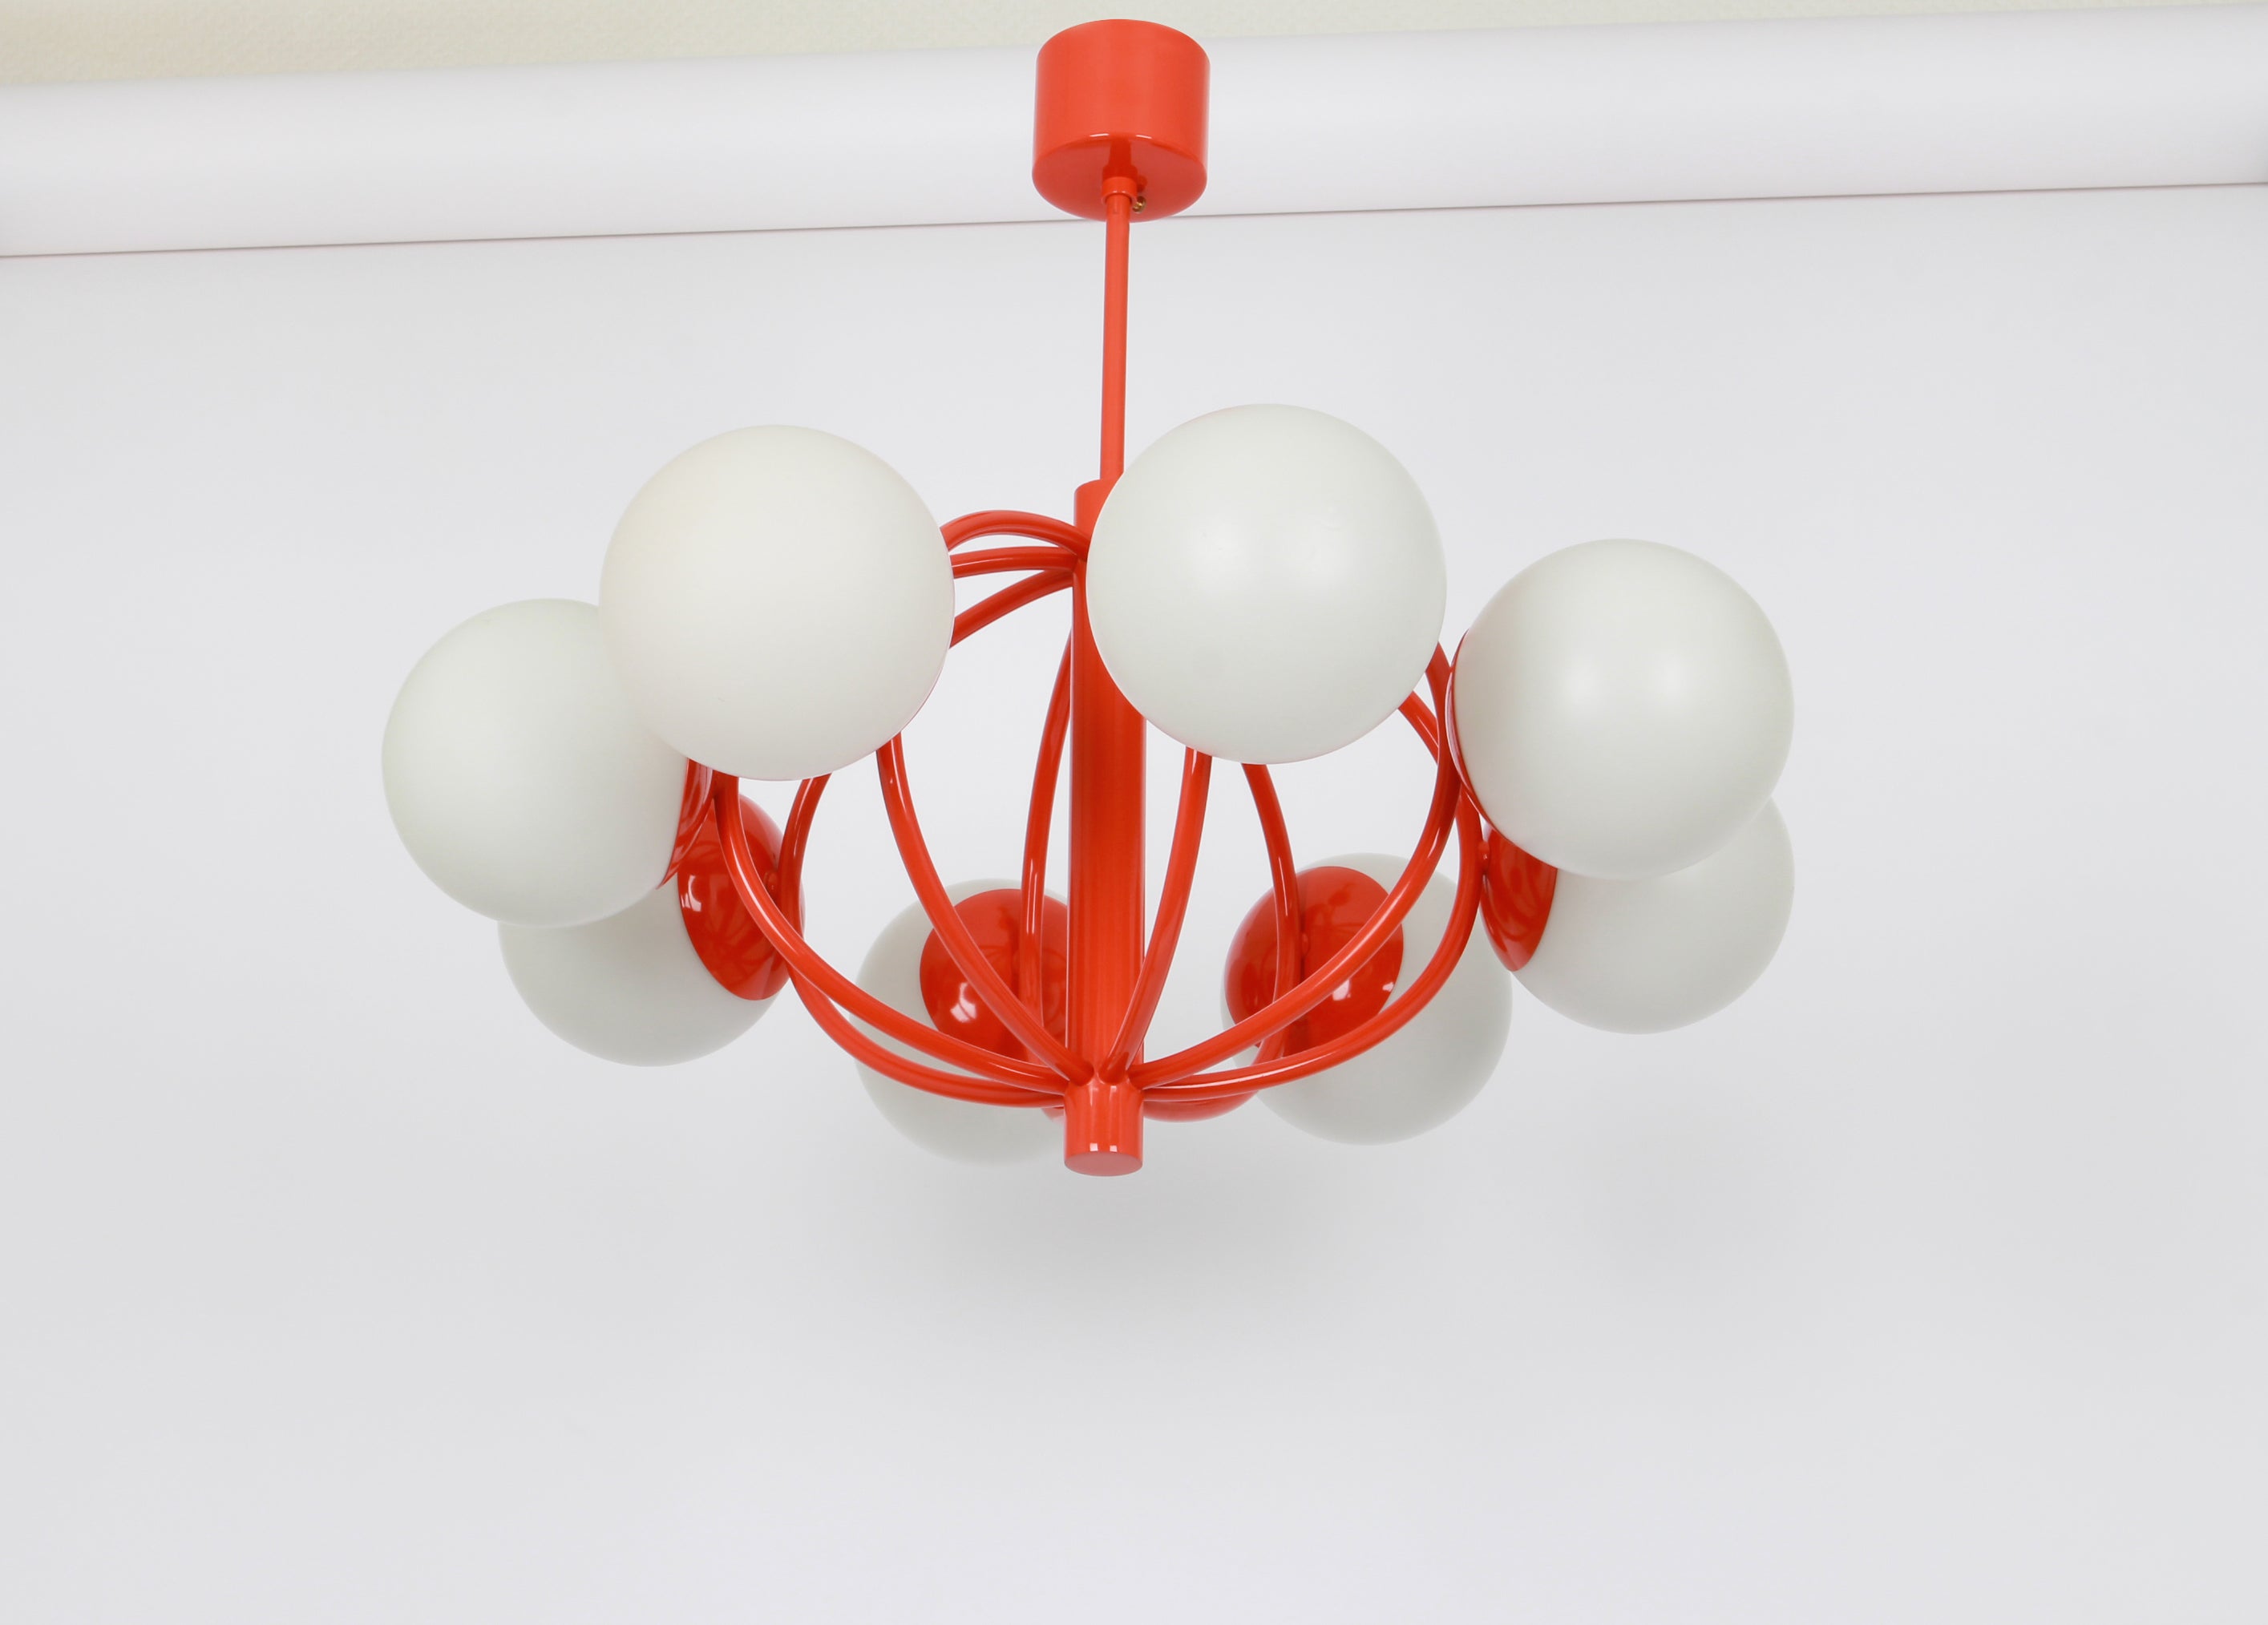 Midcentury Orbital Ceiling Lamp Pendant in Orange by Kaiser, Germany, 1960s For Sale 1